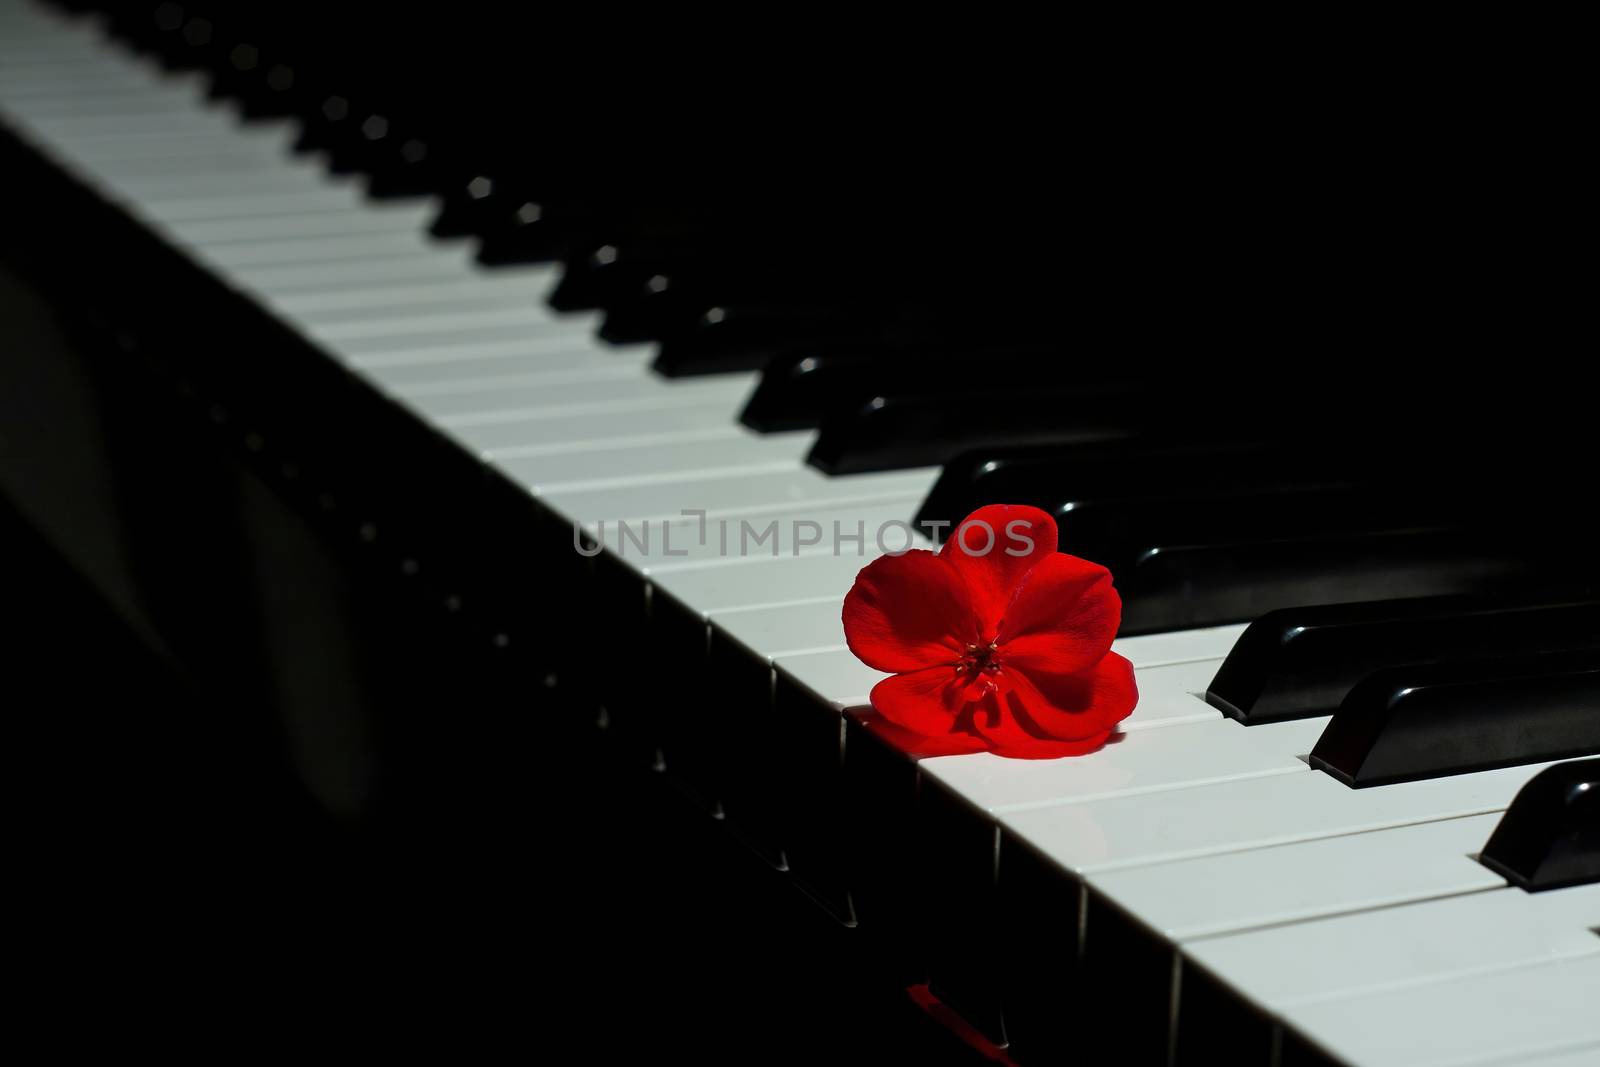 Piano with a red geranium flower Piano with a red geranium flower